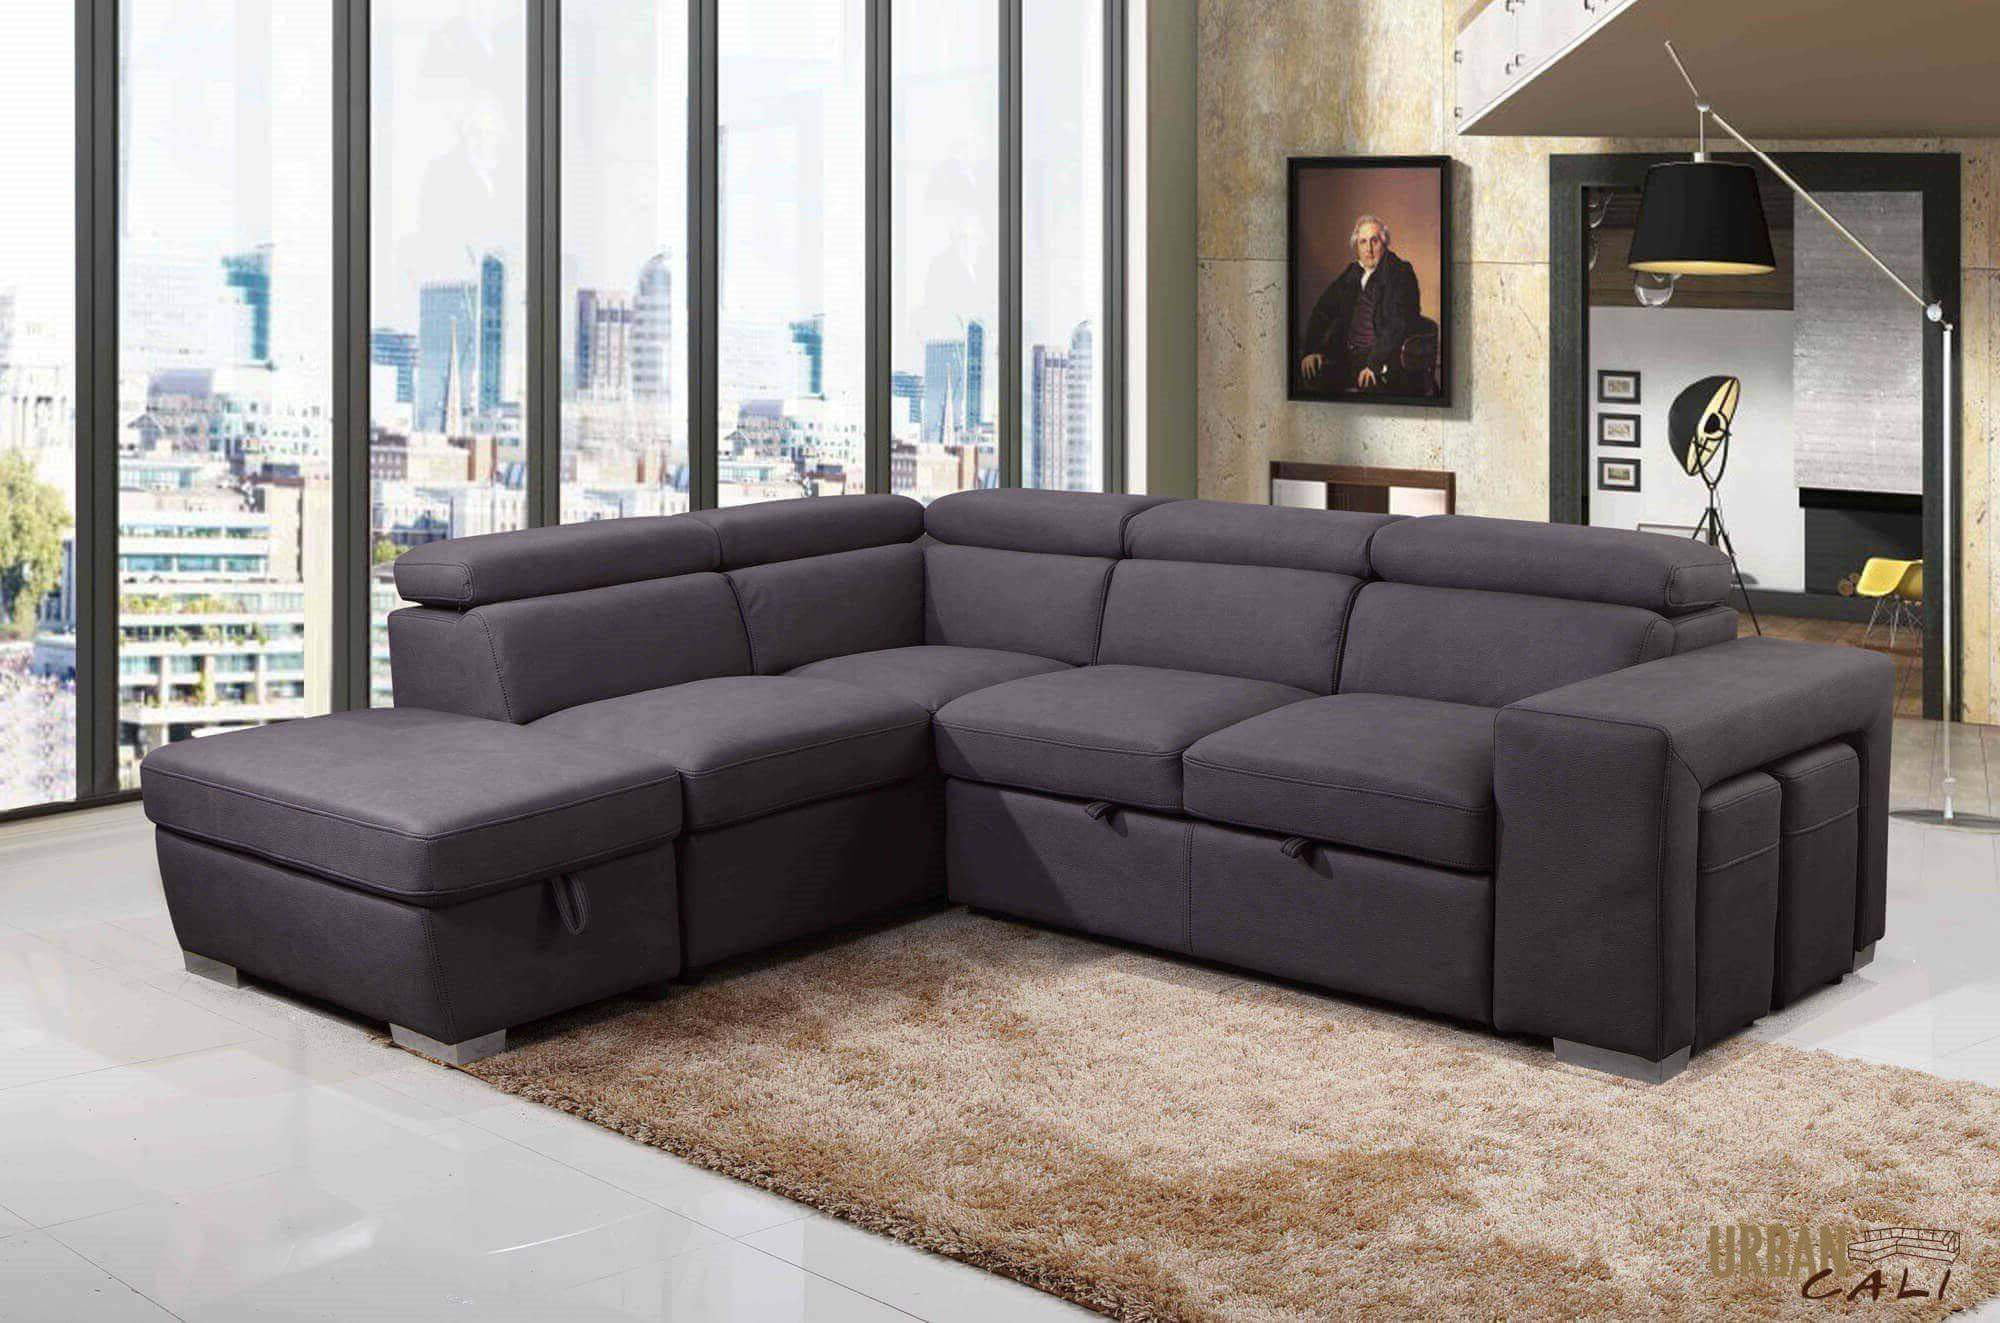 Urban Cali Pasadena Large Sleeper Sectional Sofa Bed with